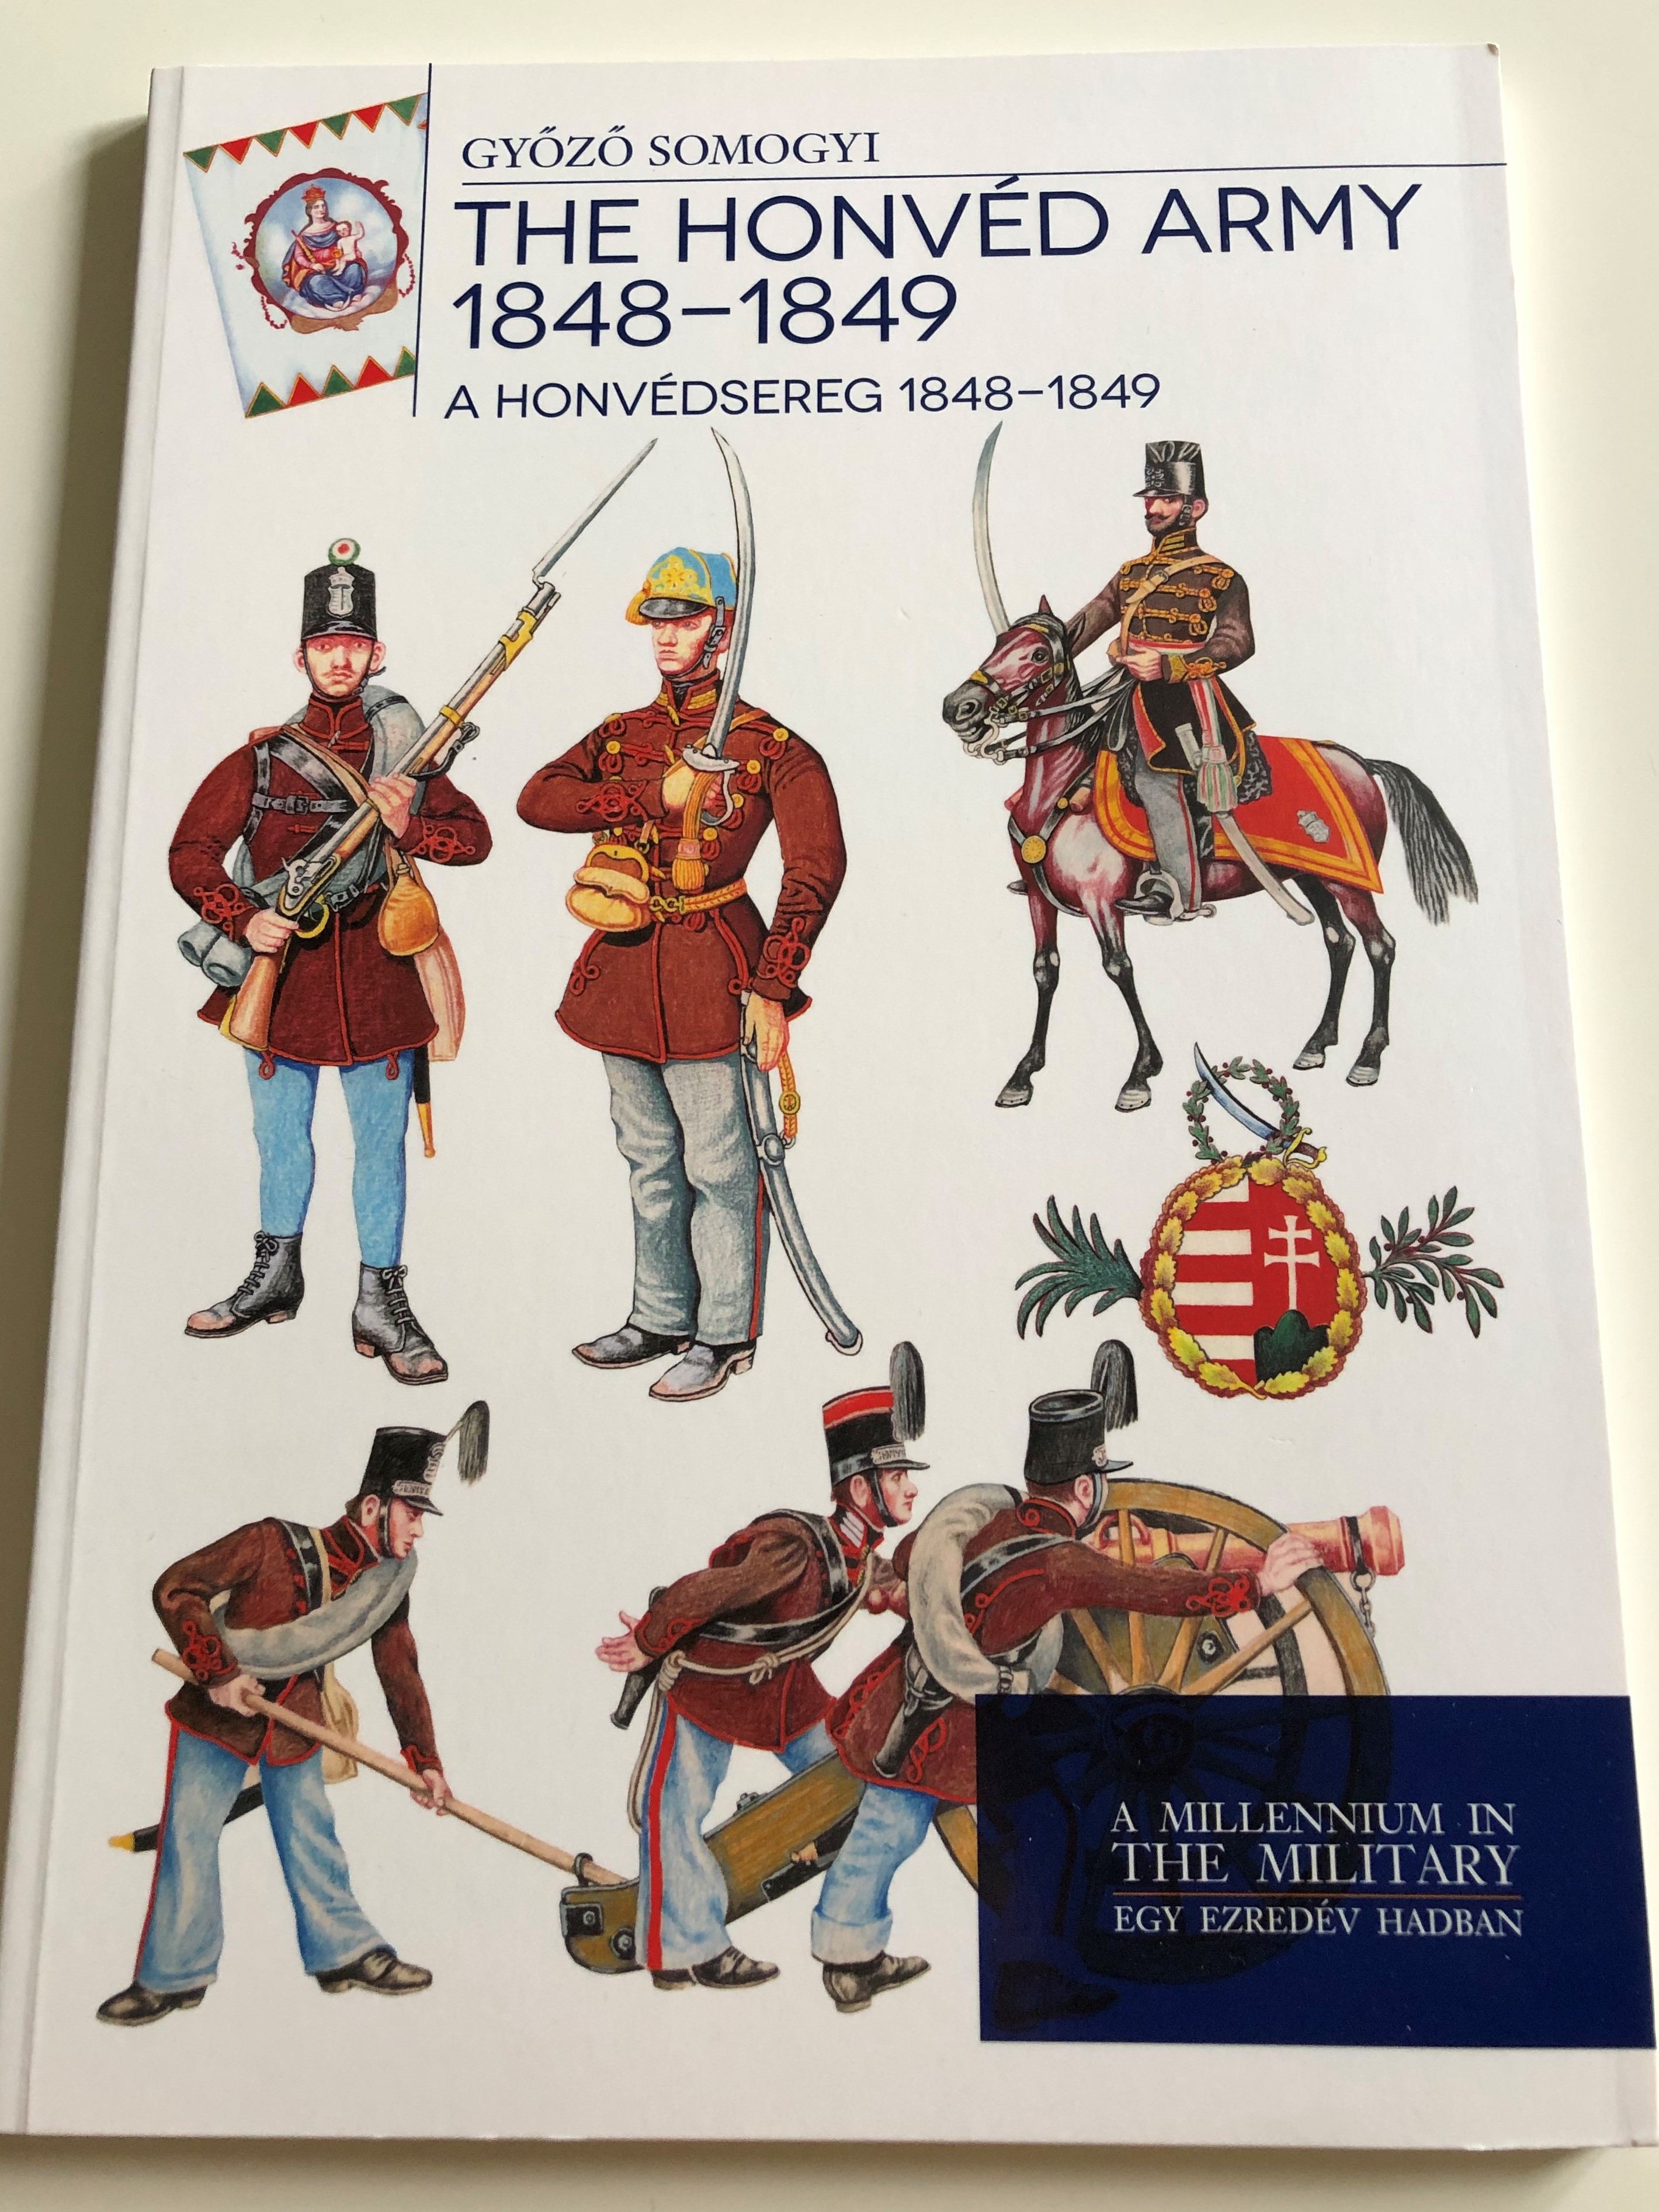 the-honv-d-army-1848-1849-by-gy-z-somogyi-a-honv-dsereg-1848-1849-a-millennium-in-the-military-egy-ezred-v-hadban-paperback-2016-hm-zr-nyi-1-.jpg